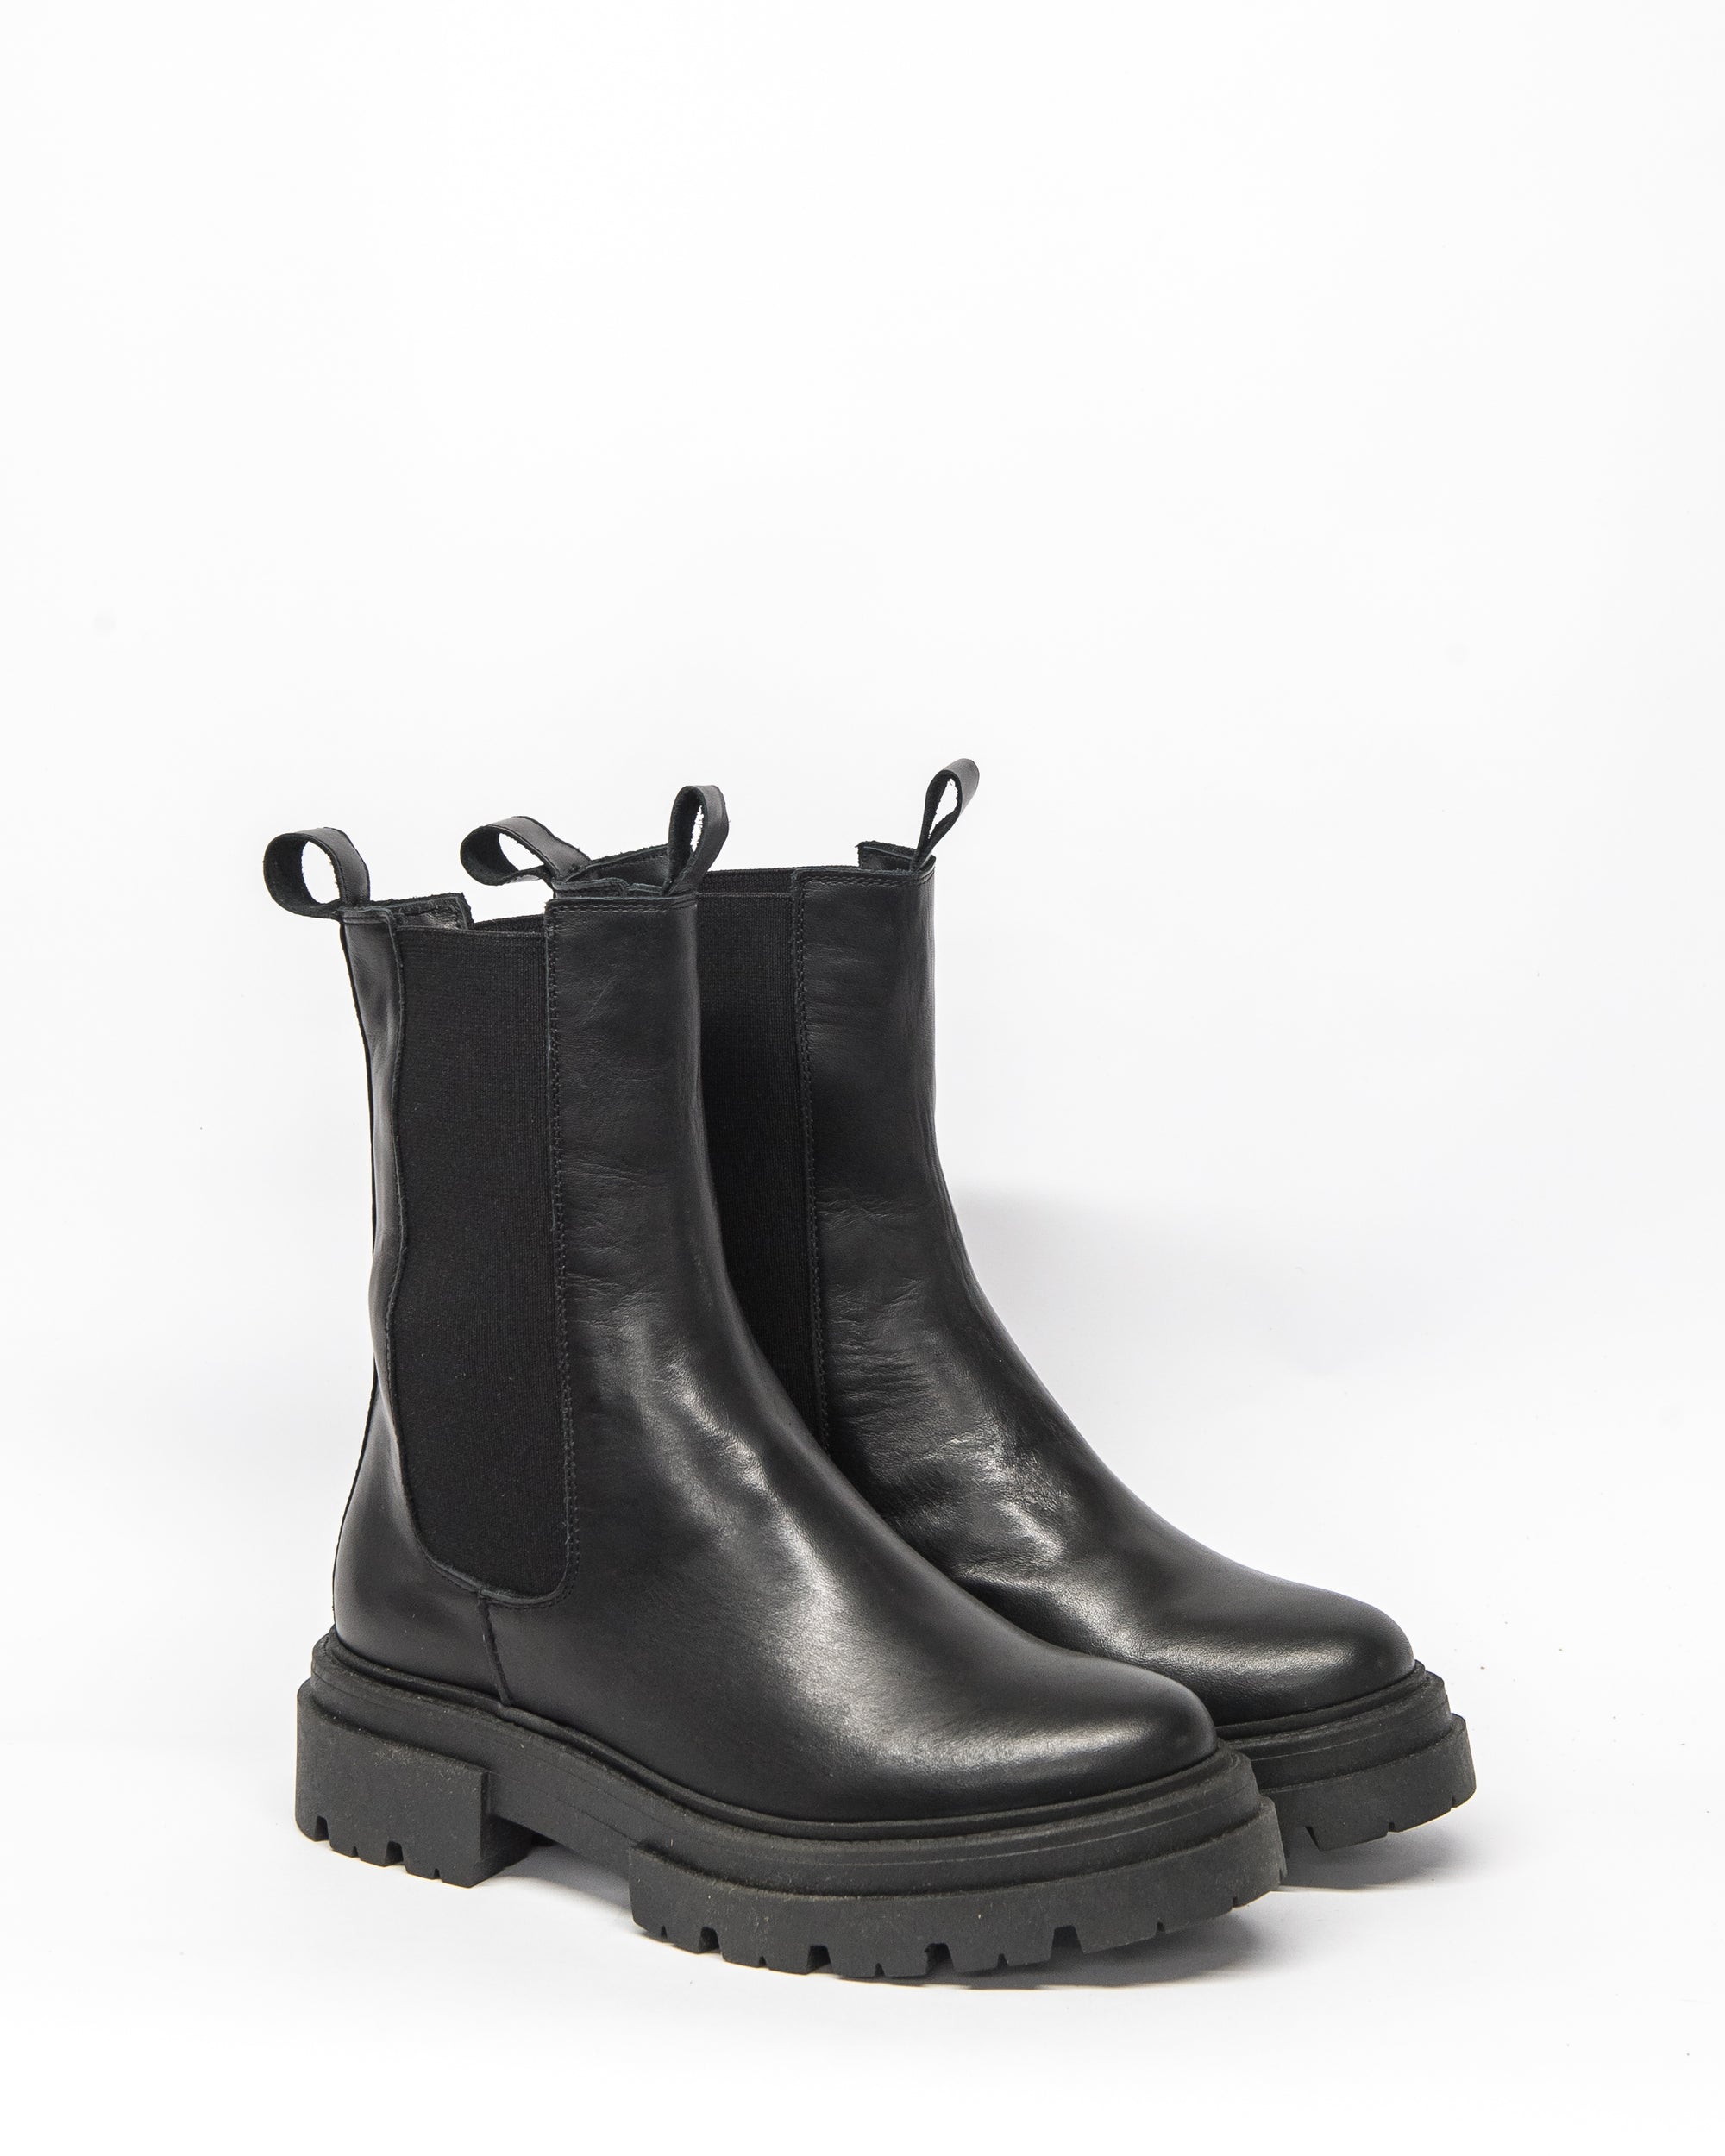 derive boot - black leather